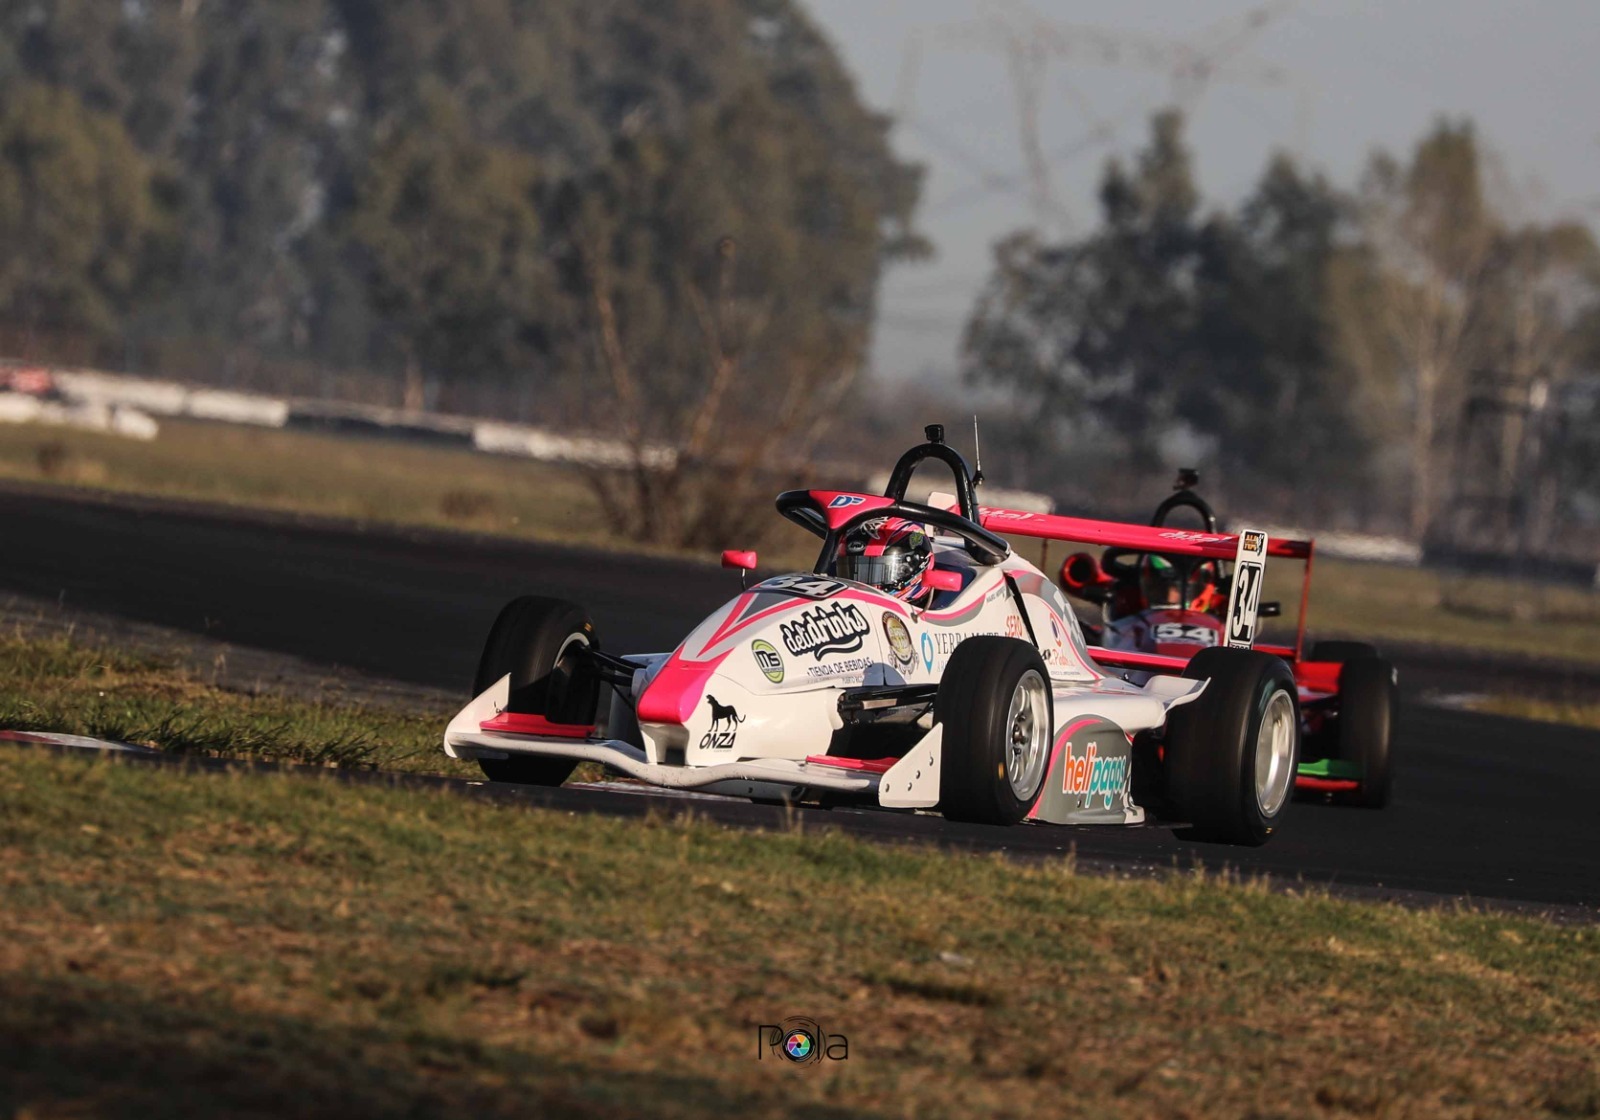 Automovilismo: fin de semana positivo para Mairu Herrera en la 4ª fecha de la Fórmula 3 Metropolitana imagen-2